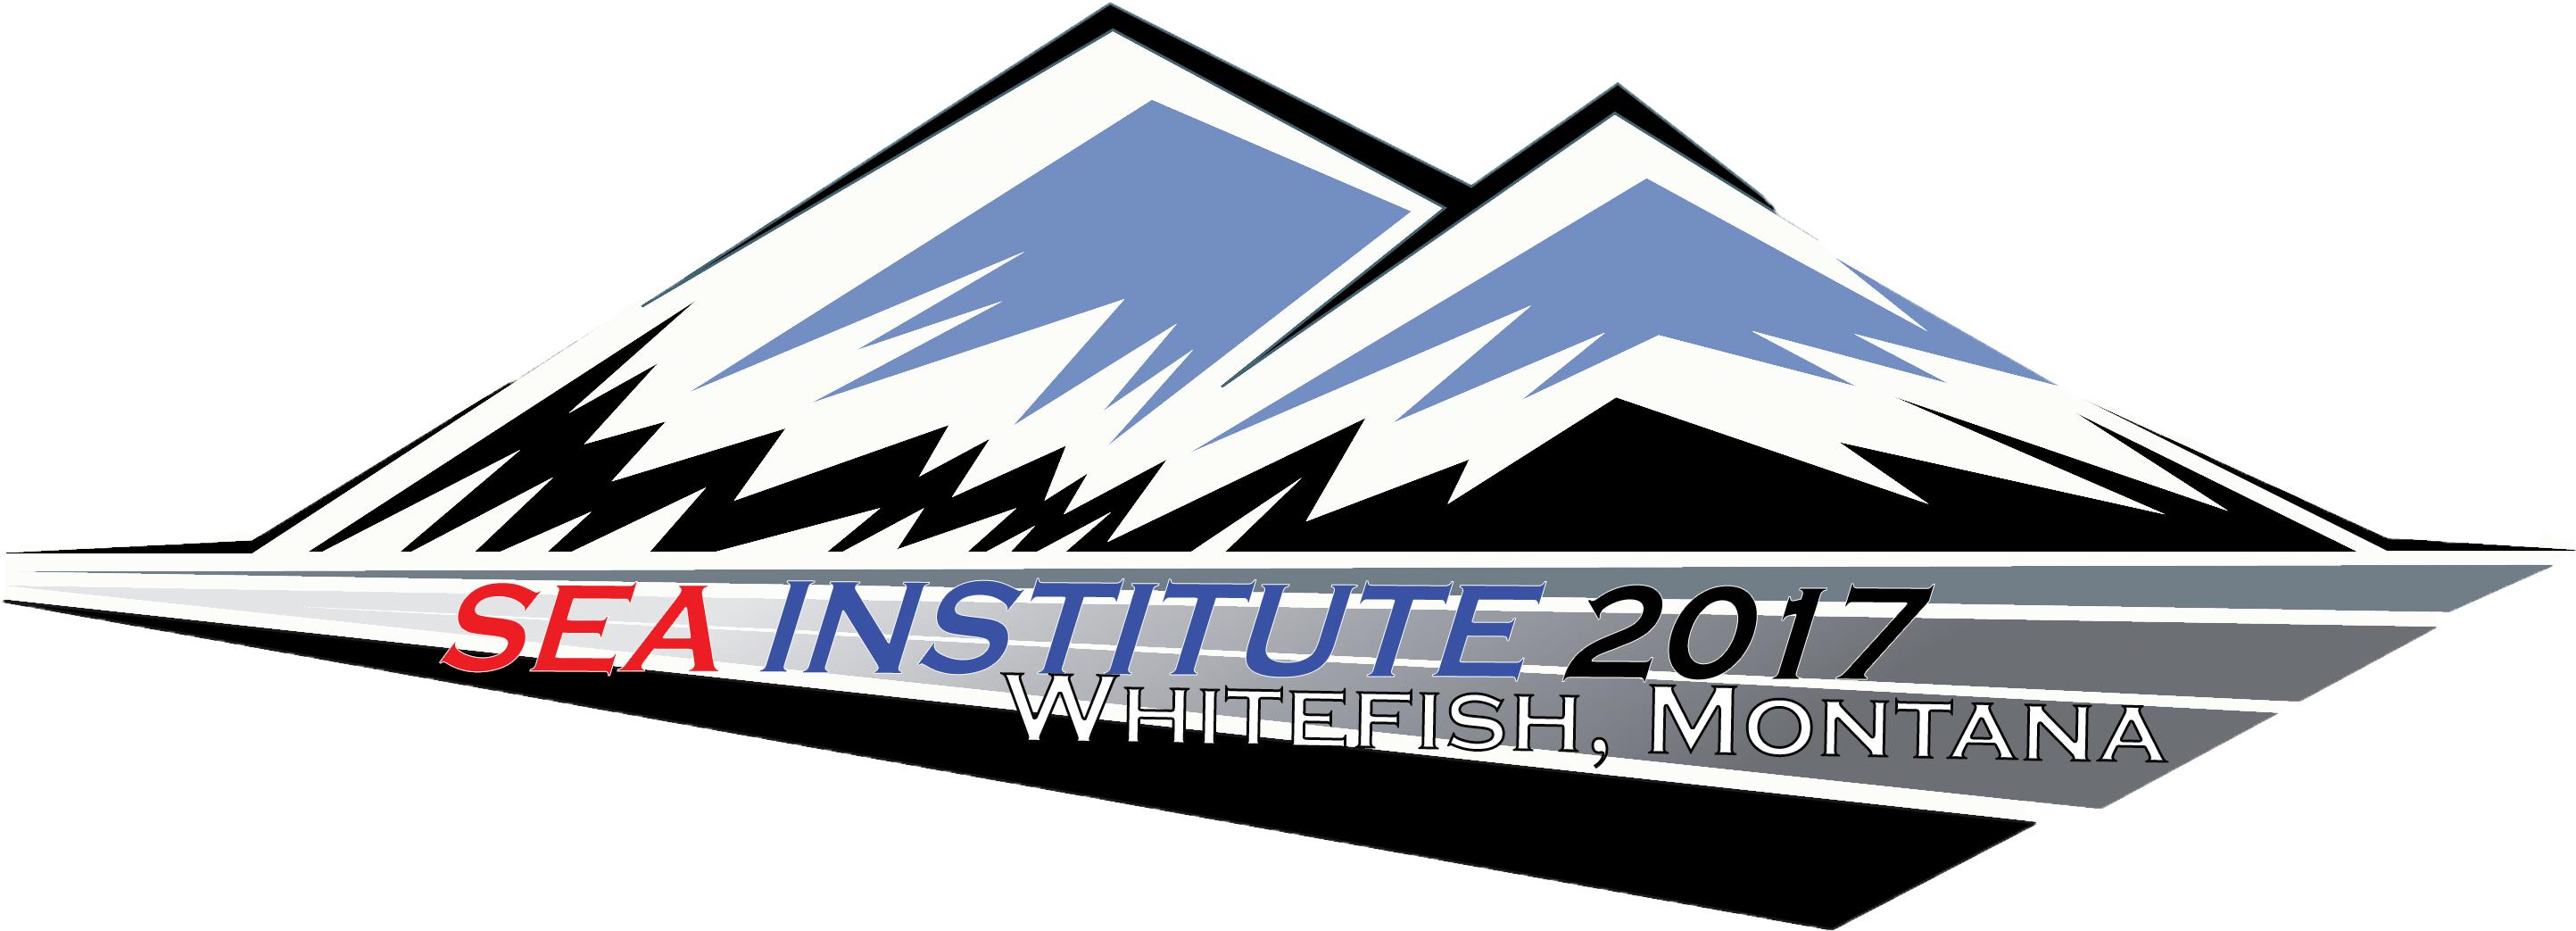 Sea Institute 2017 Registration - Mountain (3000x1200)